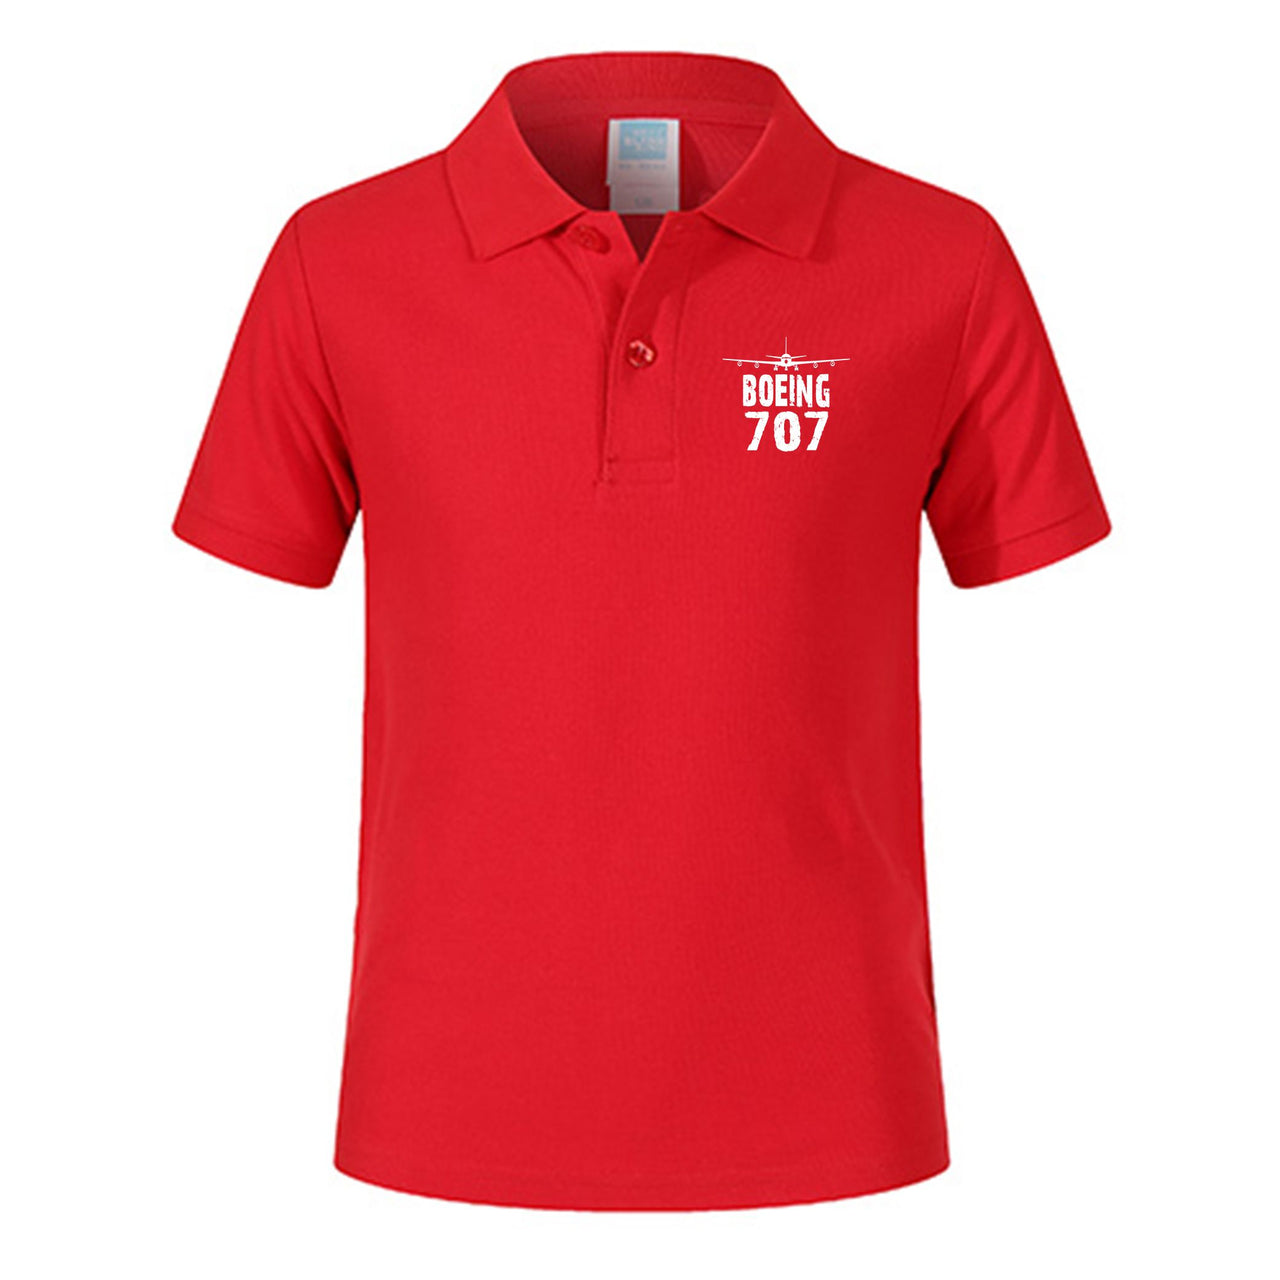 Boeing 707 & Plane Designed Children Polo T-Shirts